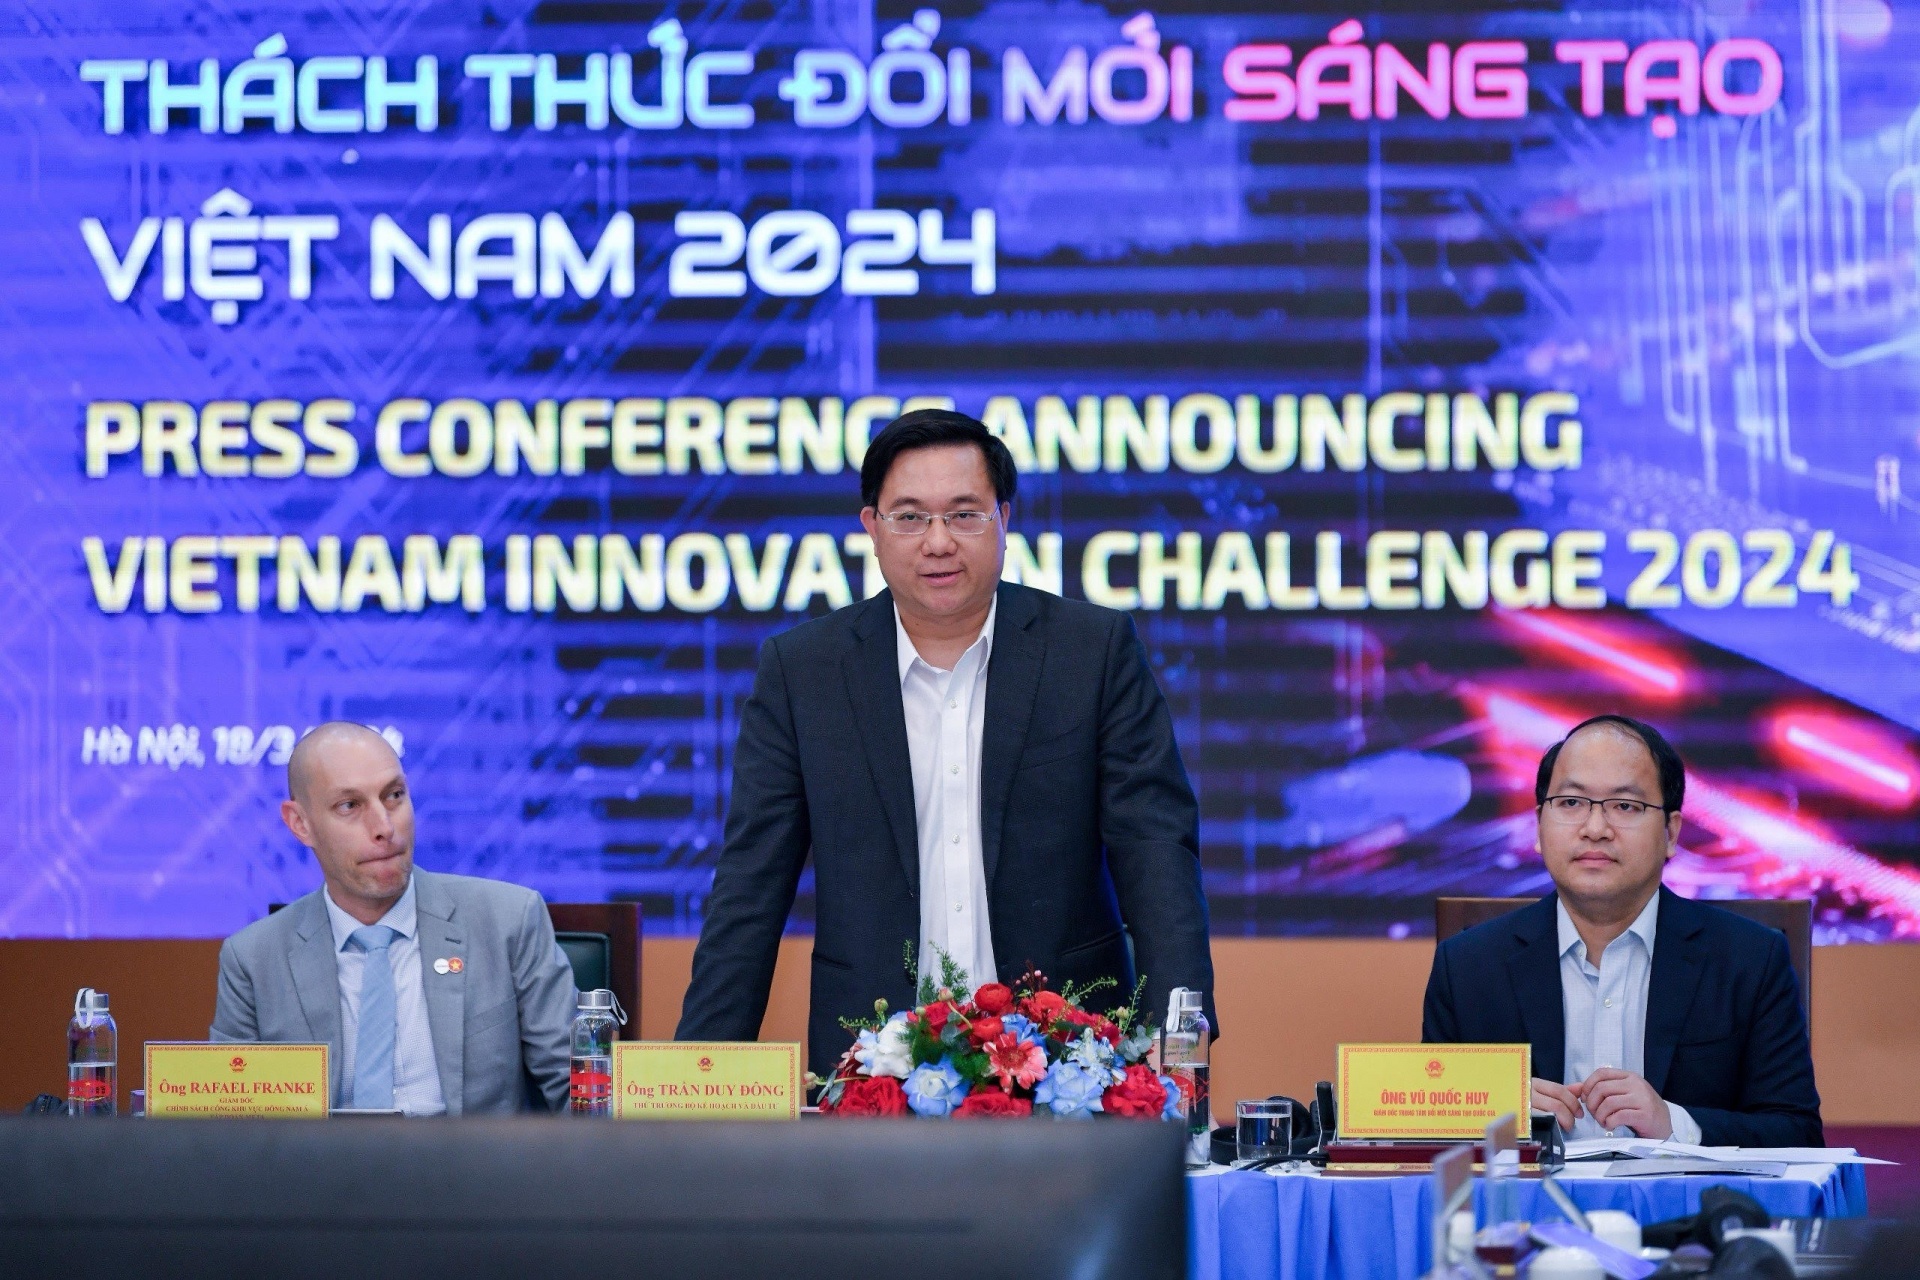 Vietnam Innovation Challenge 2024 kicks off